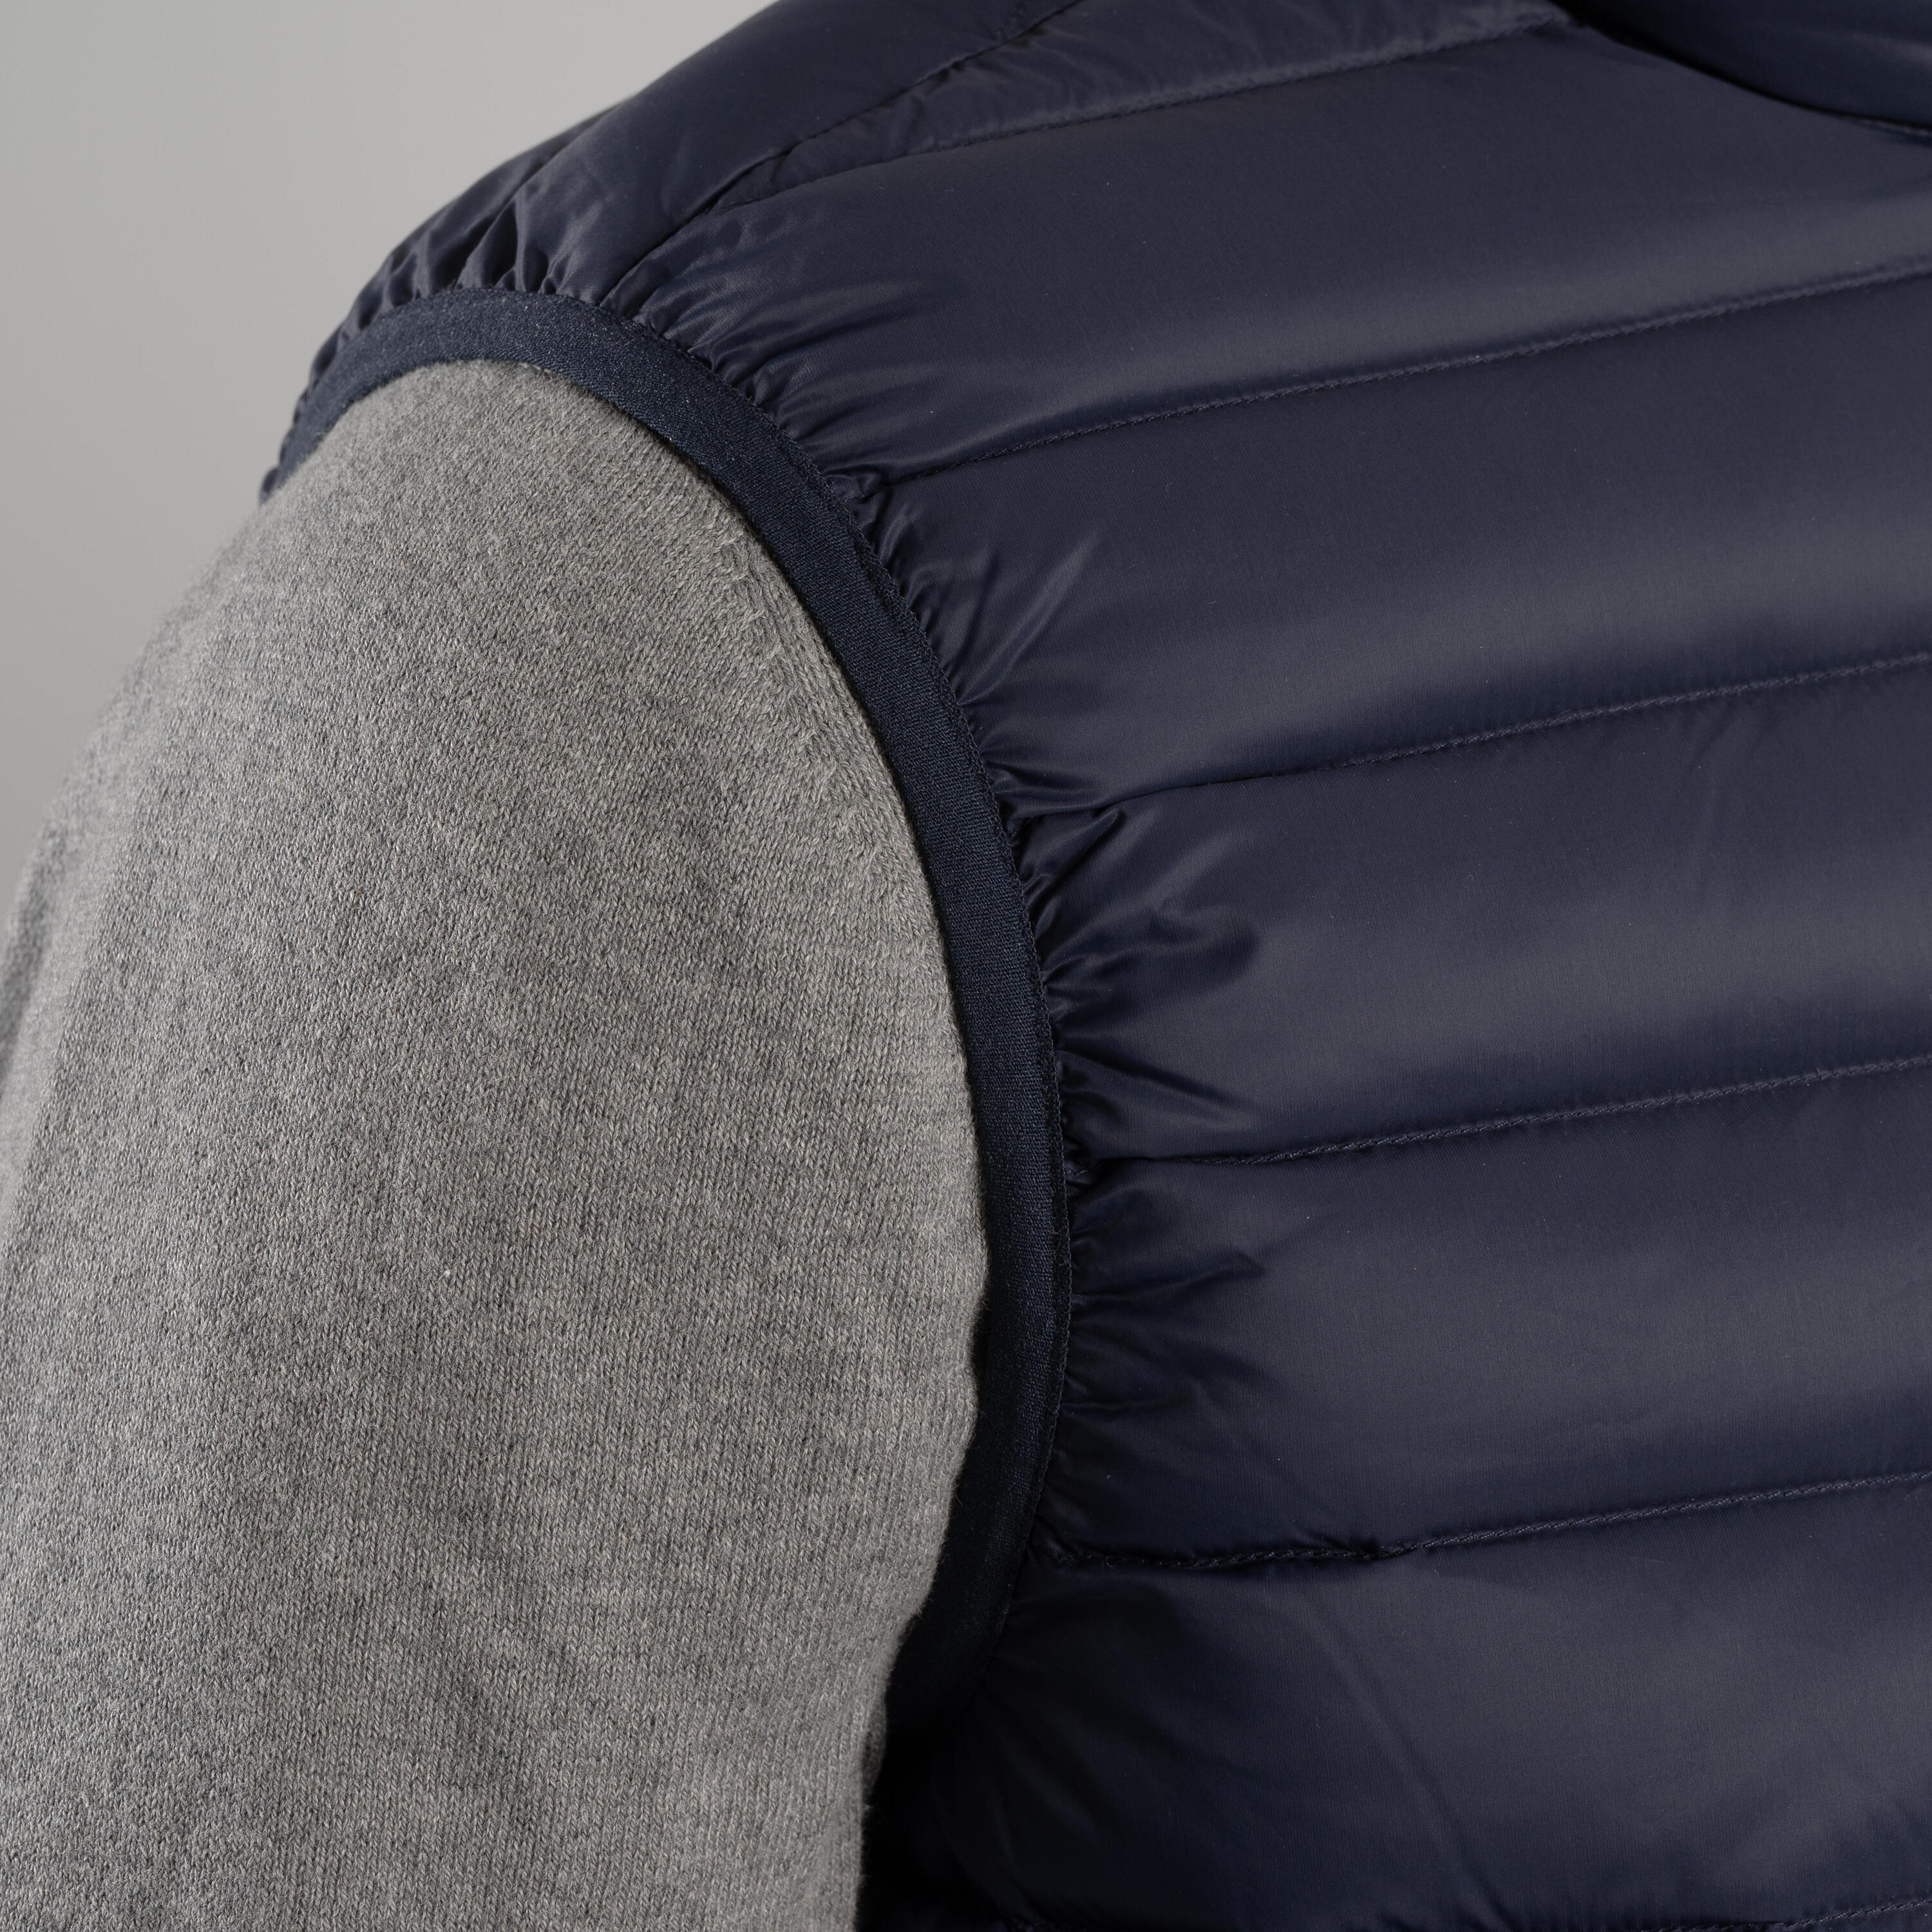 Men's sleeveless down golf jacket - MW500 navy blue 8/11